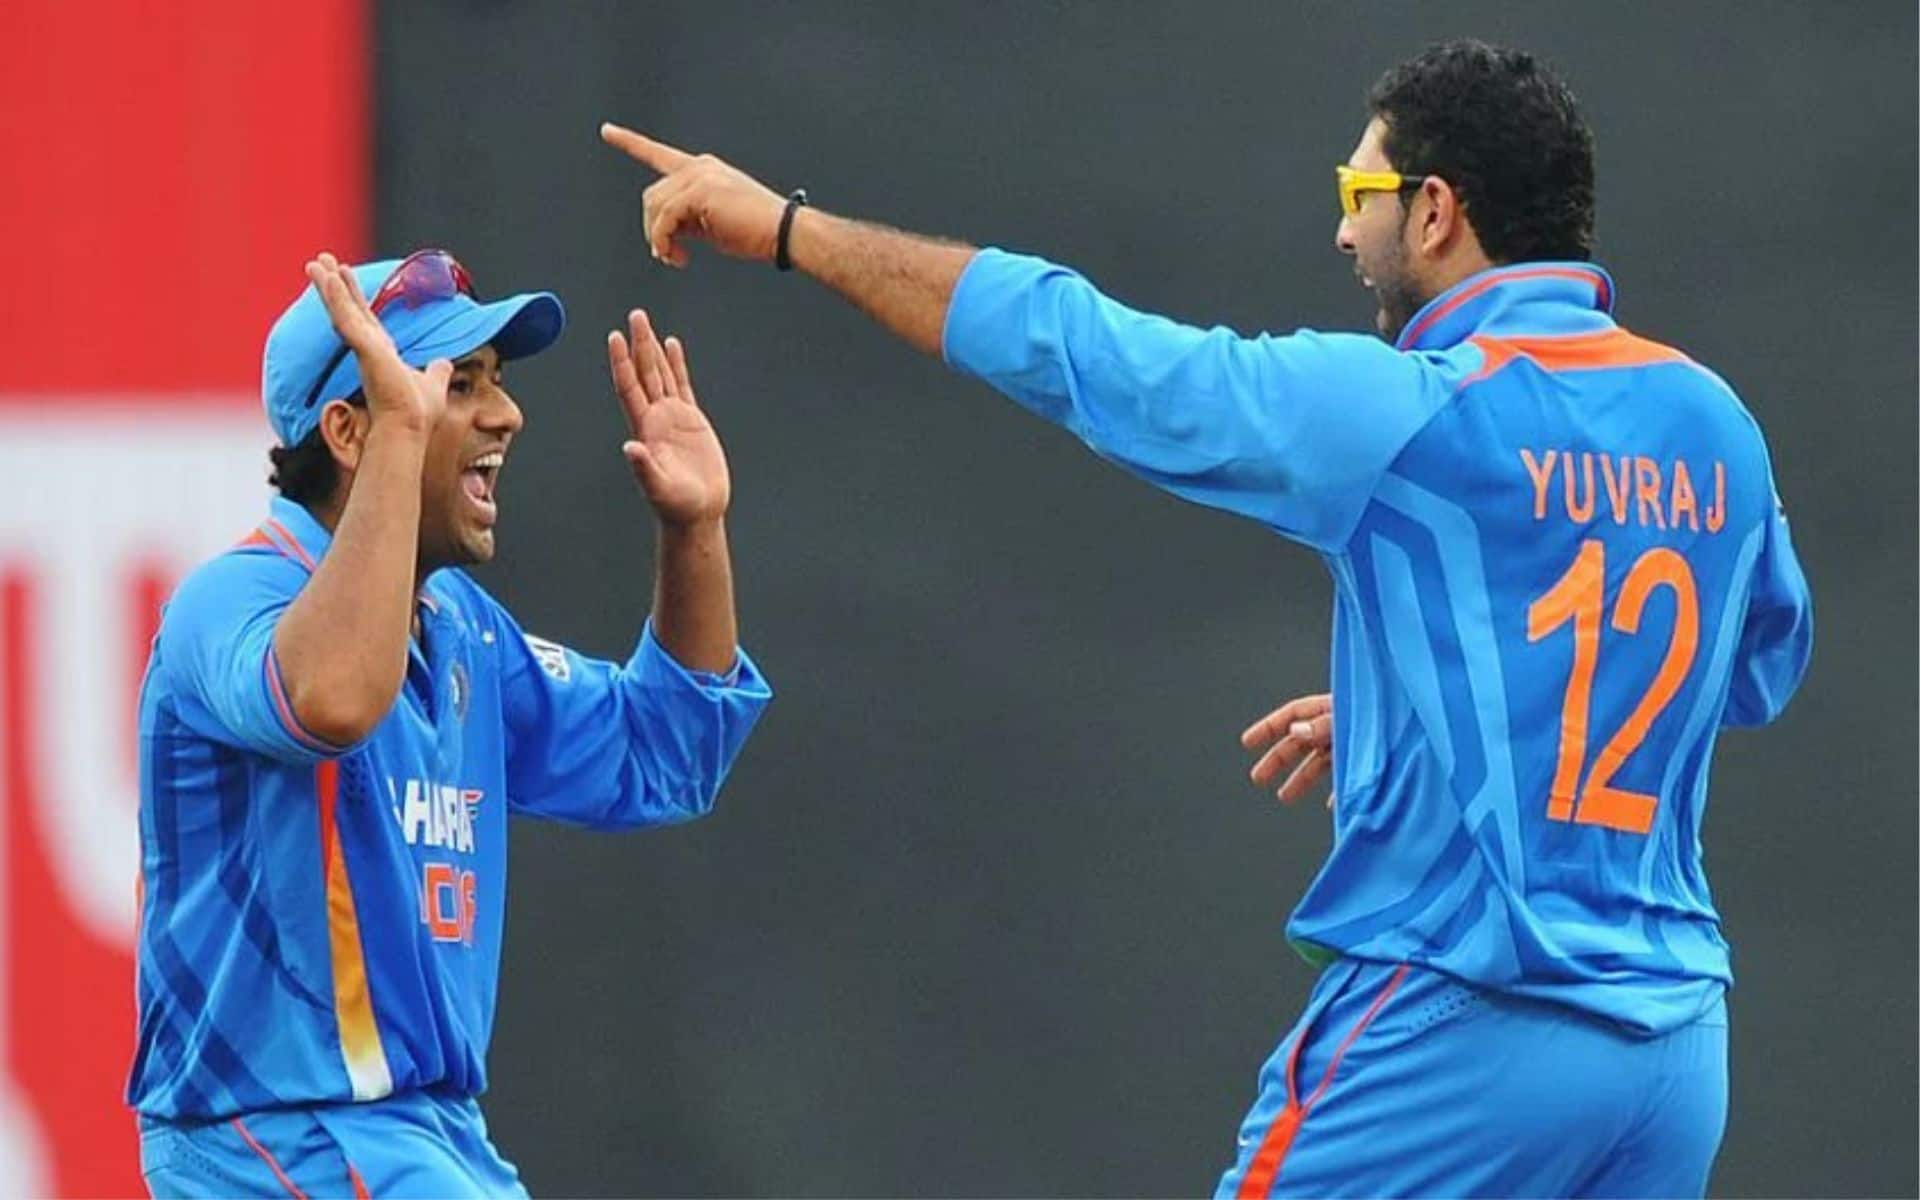 Yuvraj Singh and Rohit Sharma during their Team India playing days (x.com)